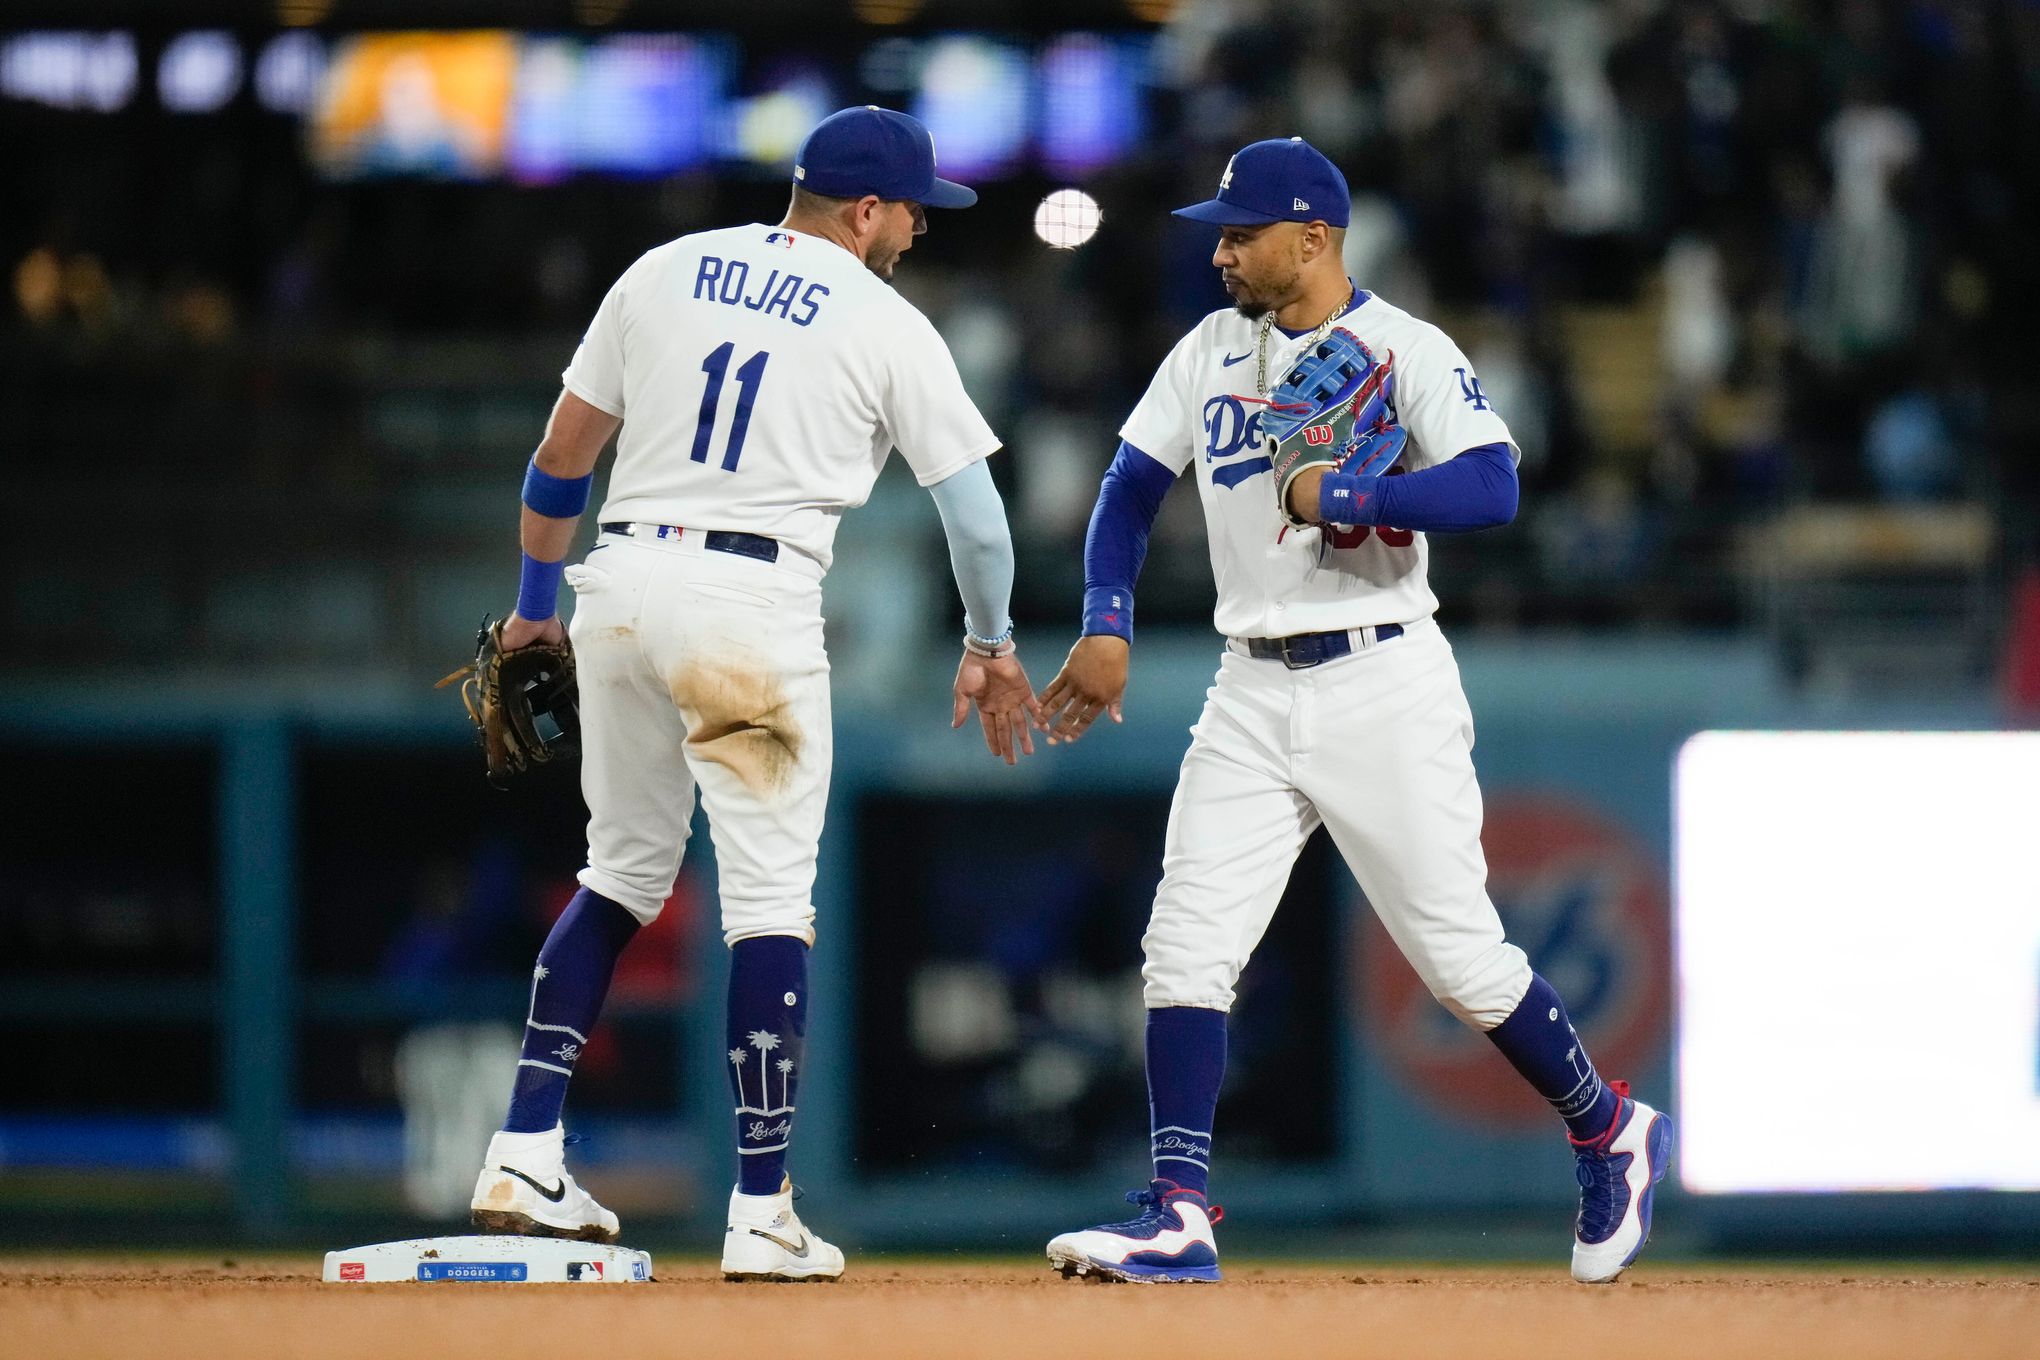 Dodgers Fans React to LA Debuting New City Connect Uniforms